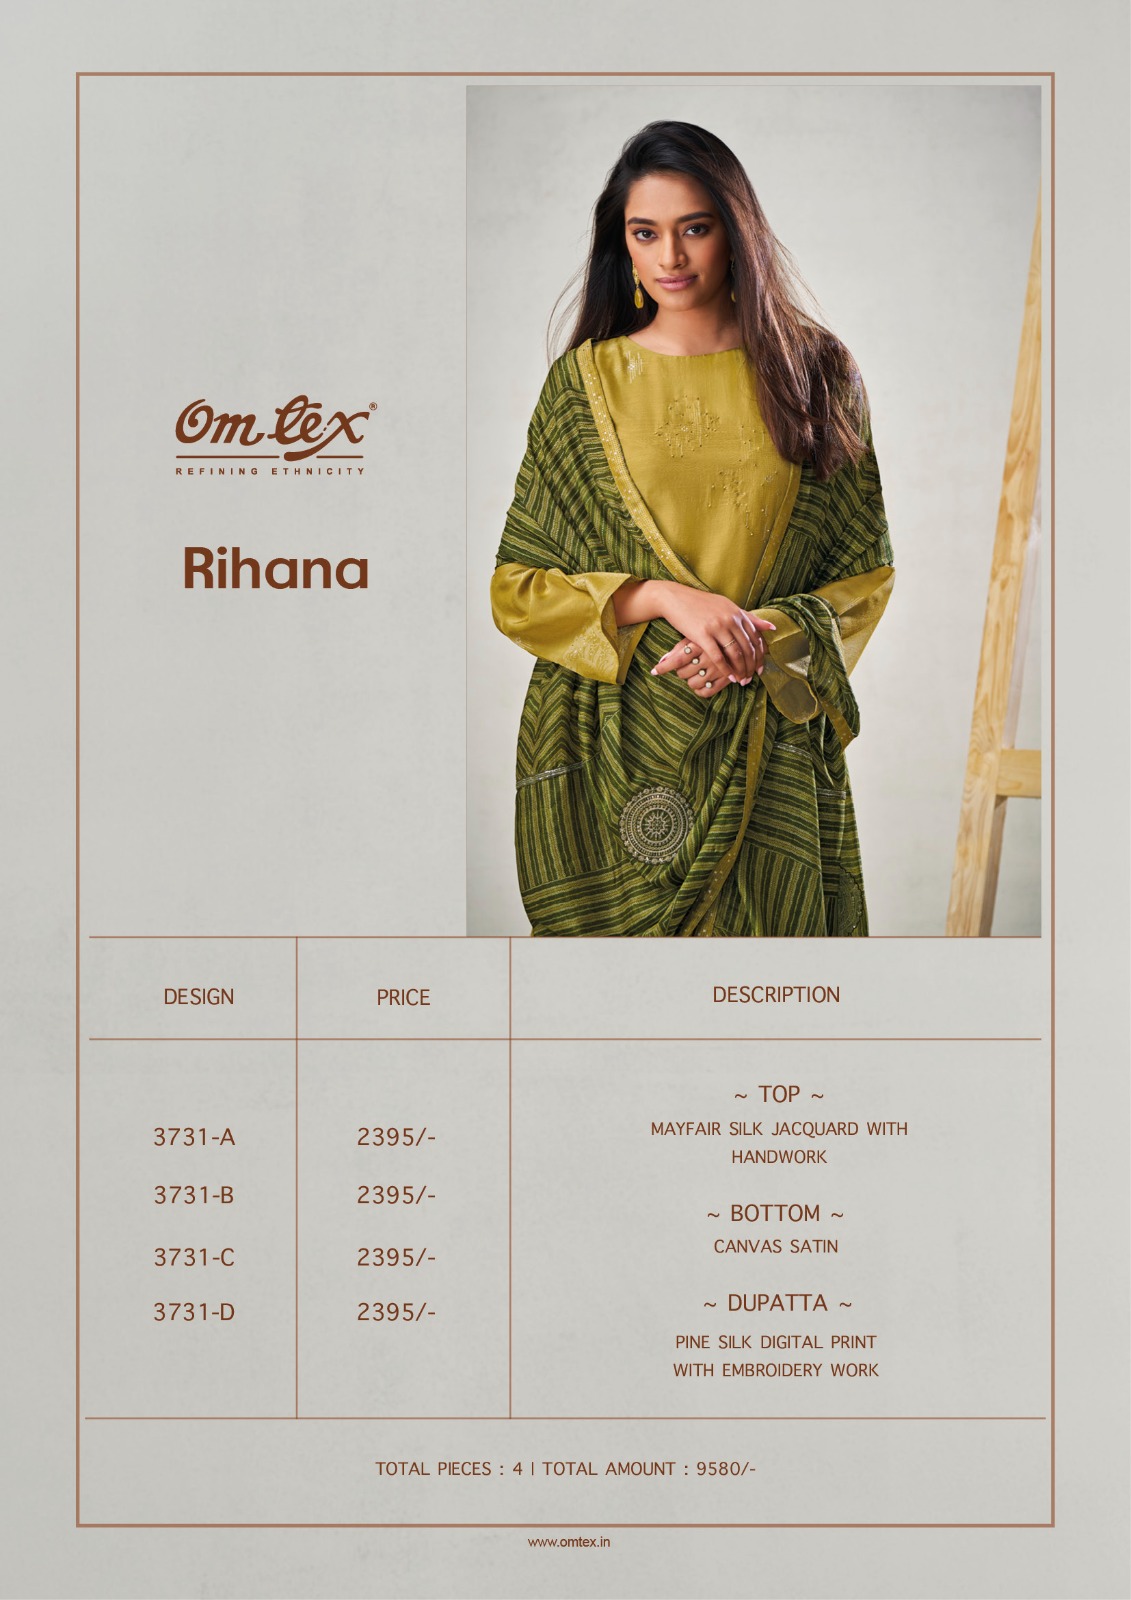 Omtex Rihana collection 6